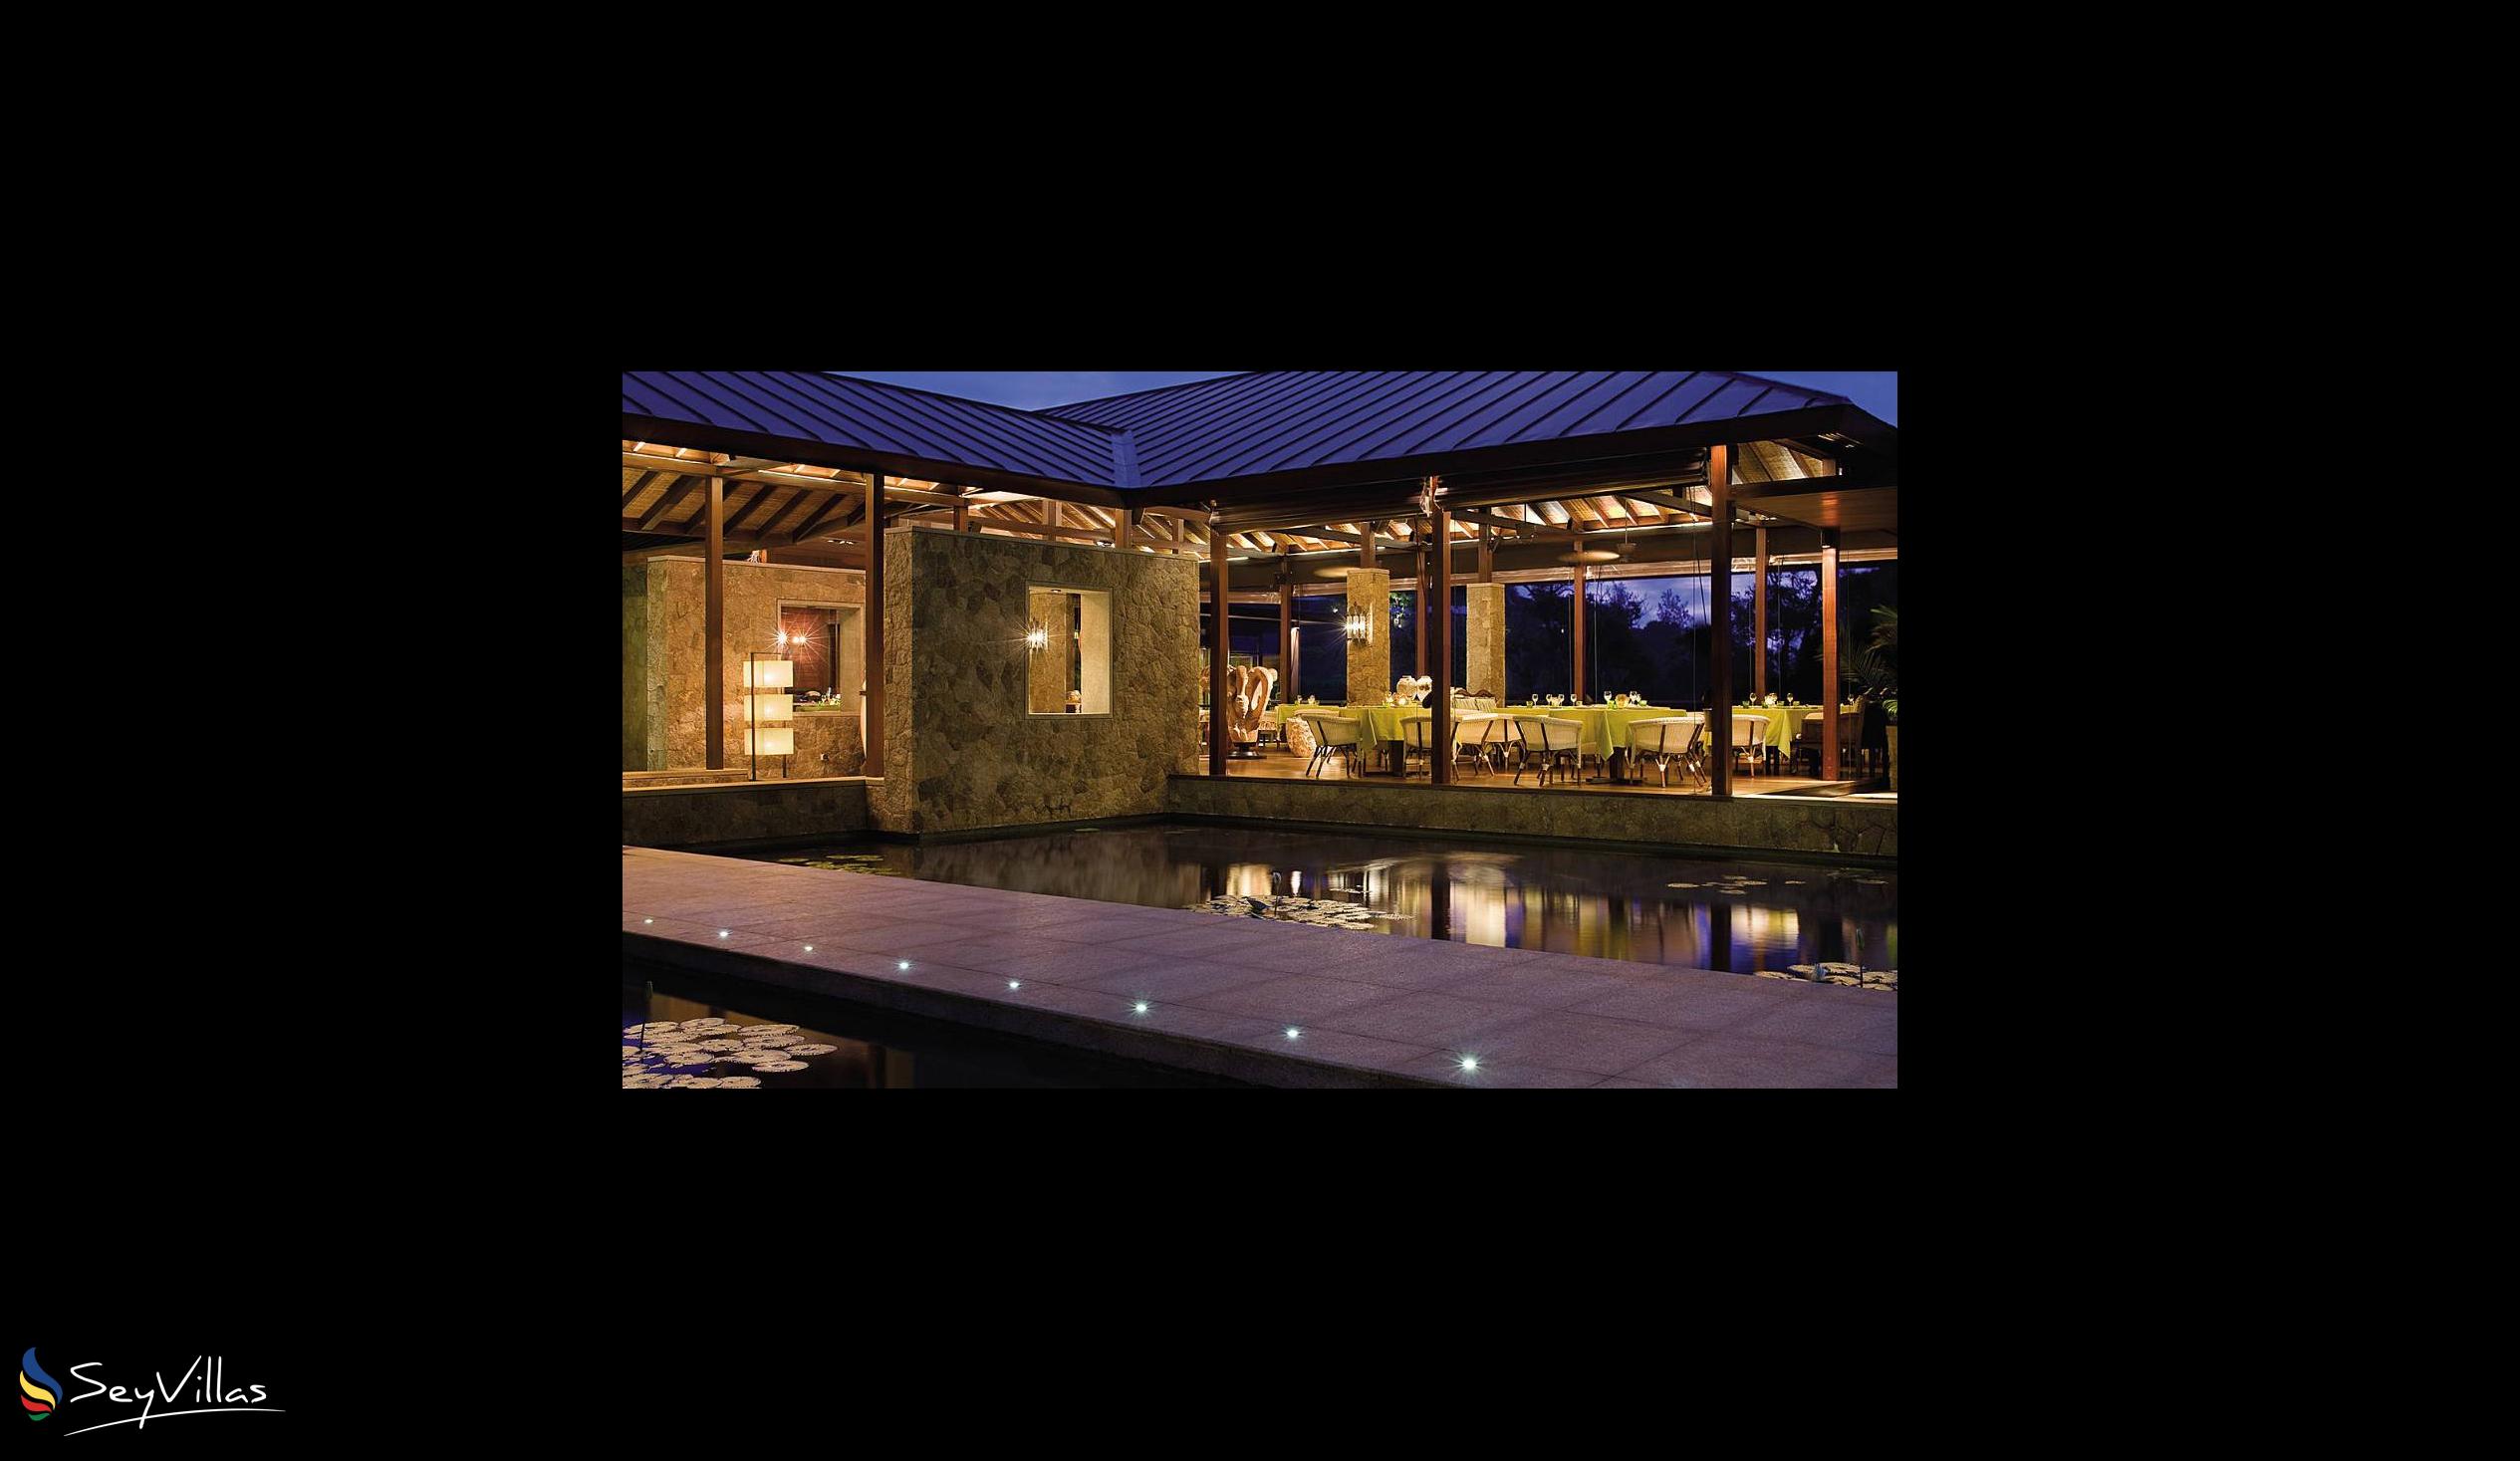 Photo 11: Four Seasons Resort - Indoor area - Mahé (Seychelles)